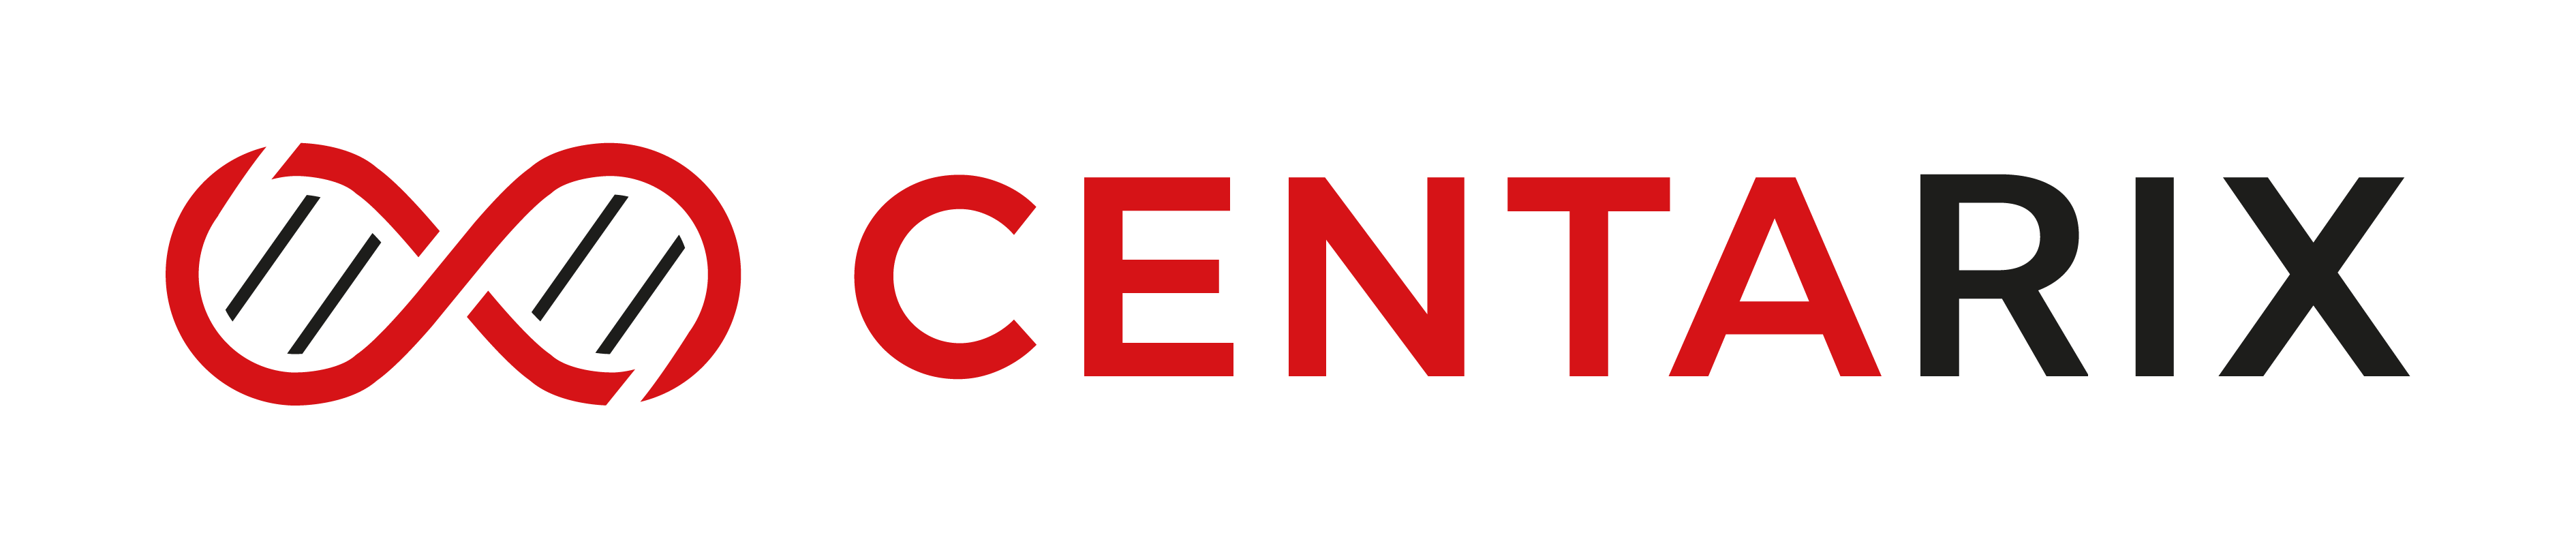 Centarix Biotech logo